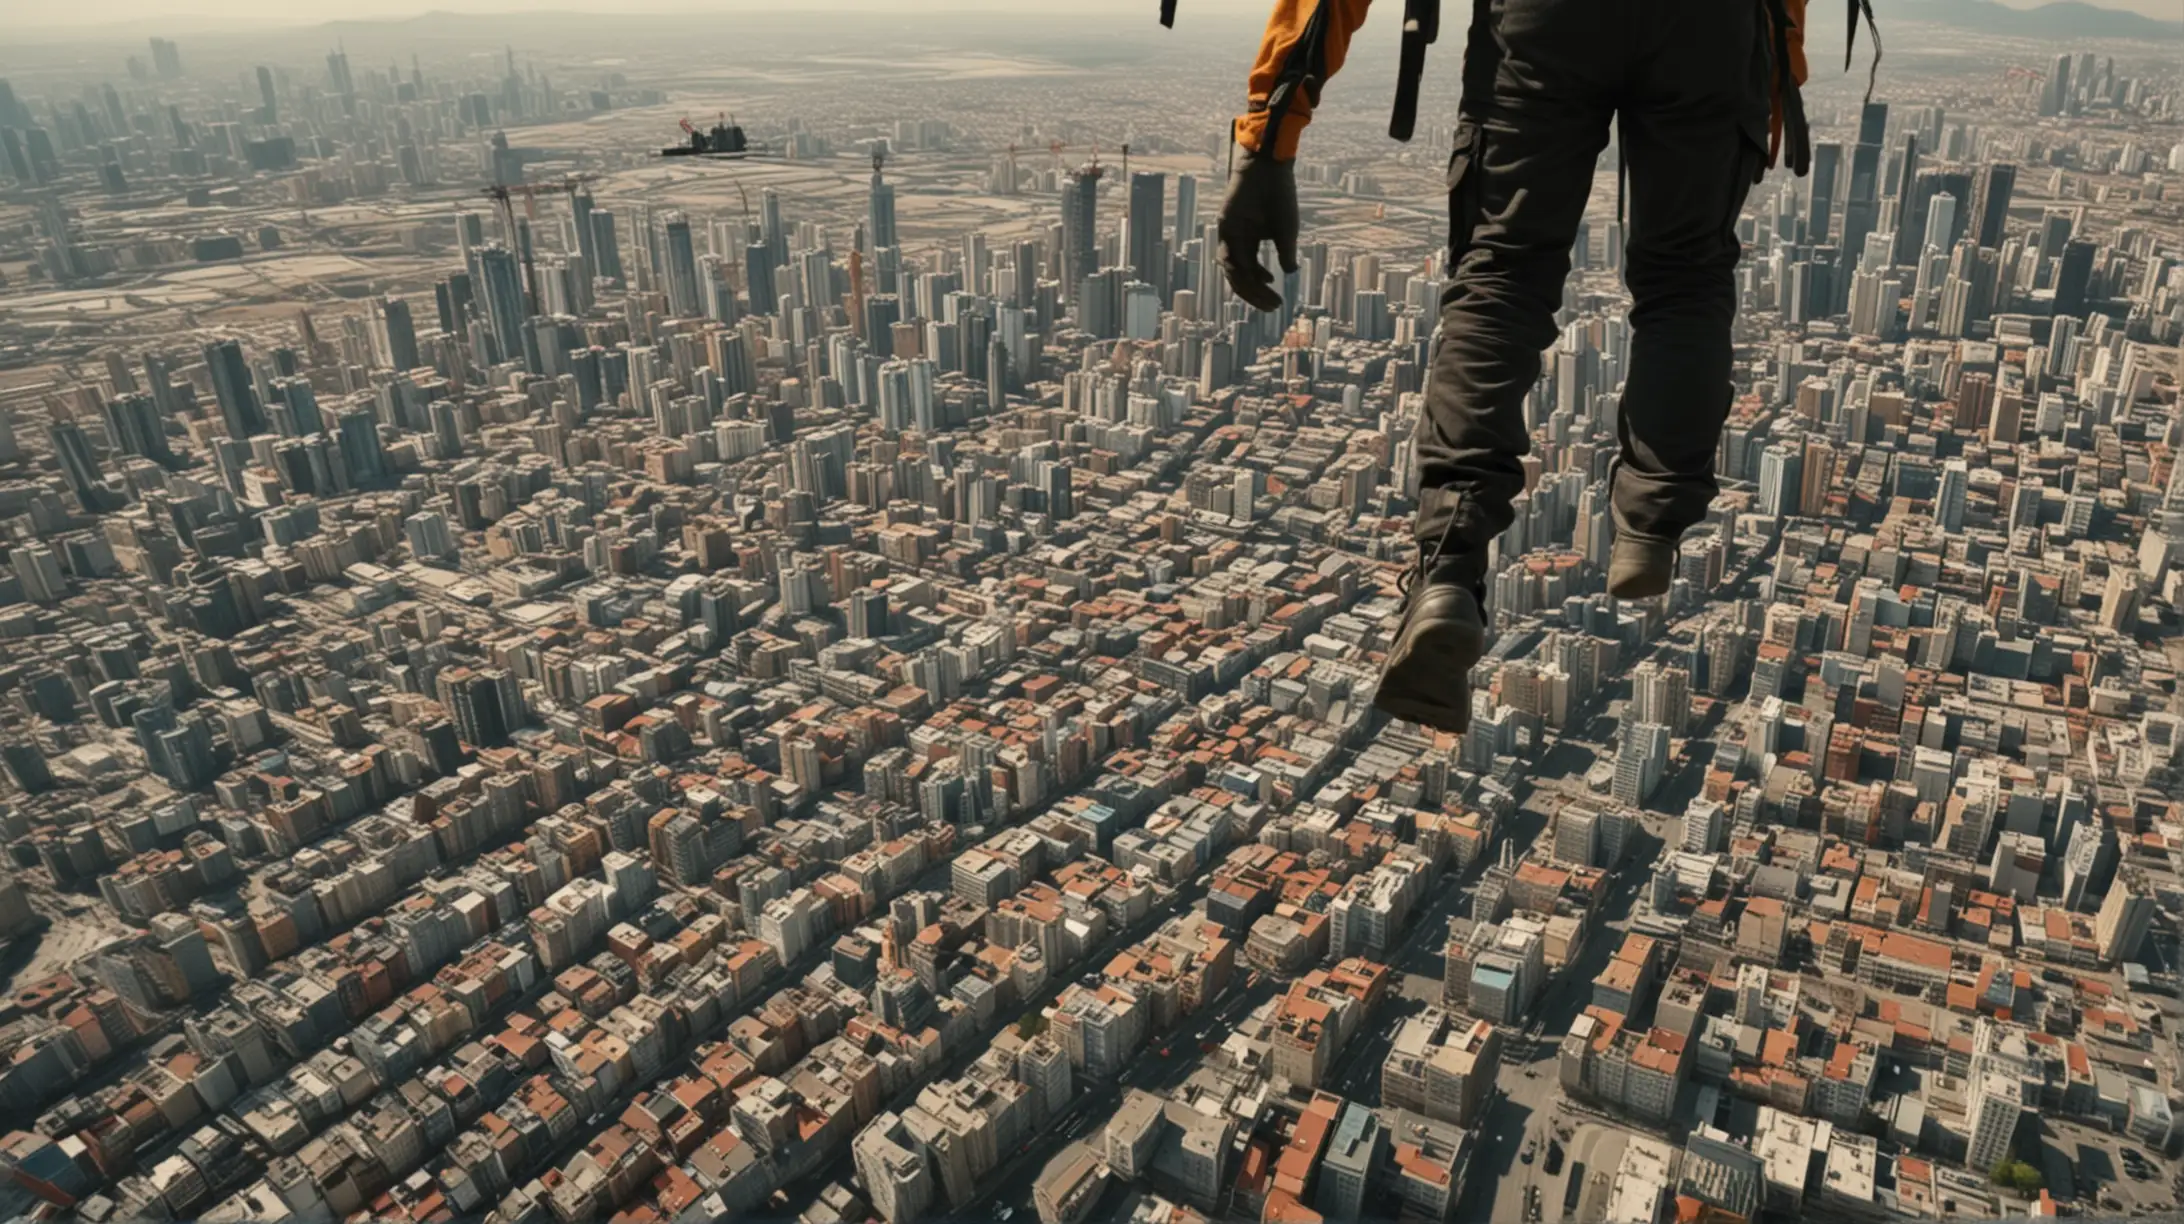 Stuntmans DeathDefying Leap Across Huge Cranes in Urban Cityscape